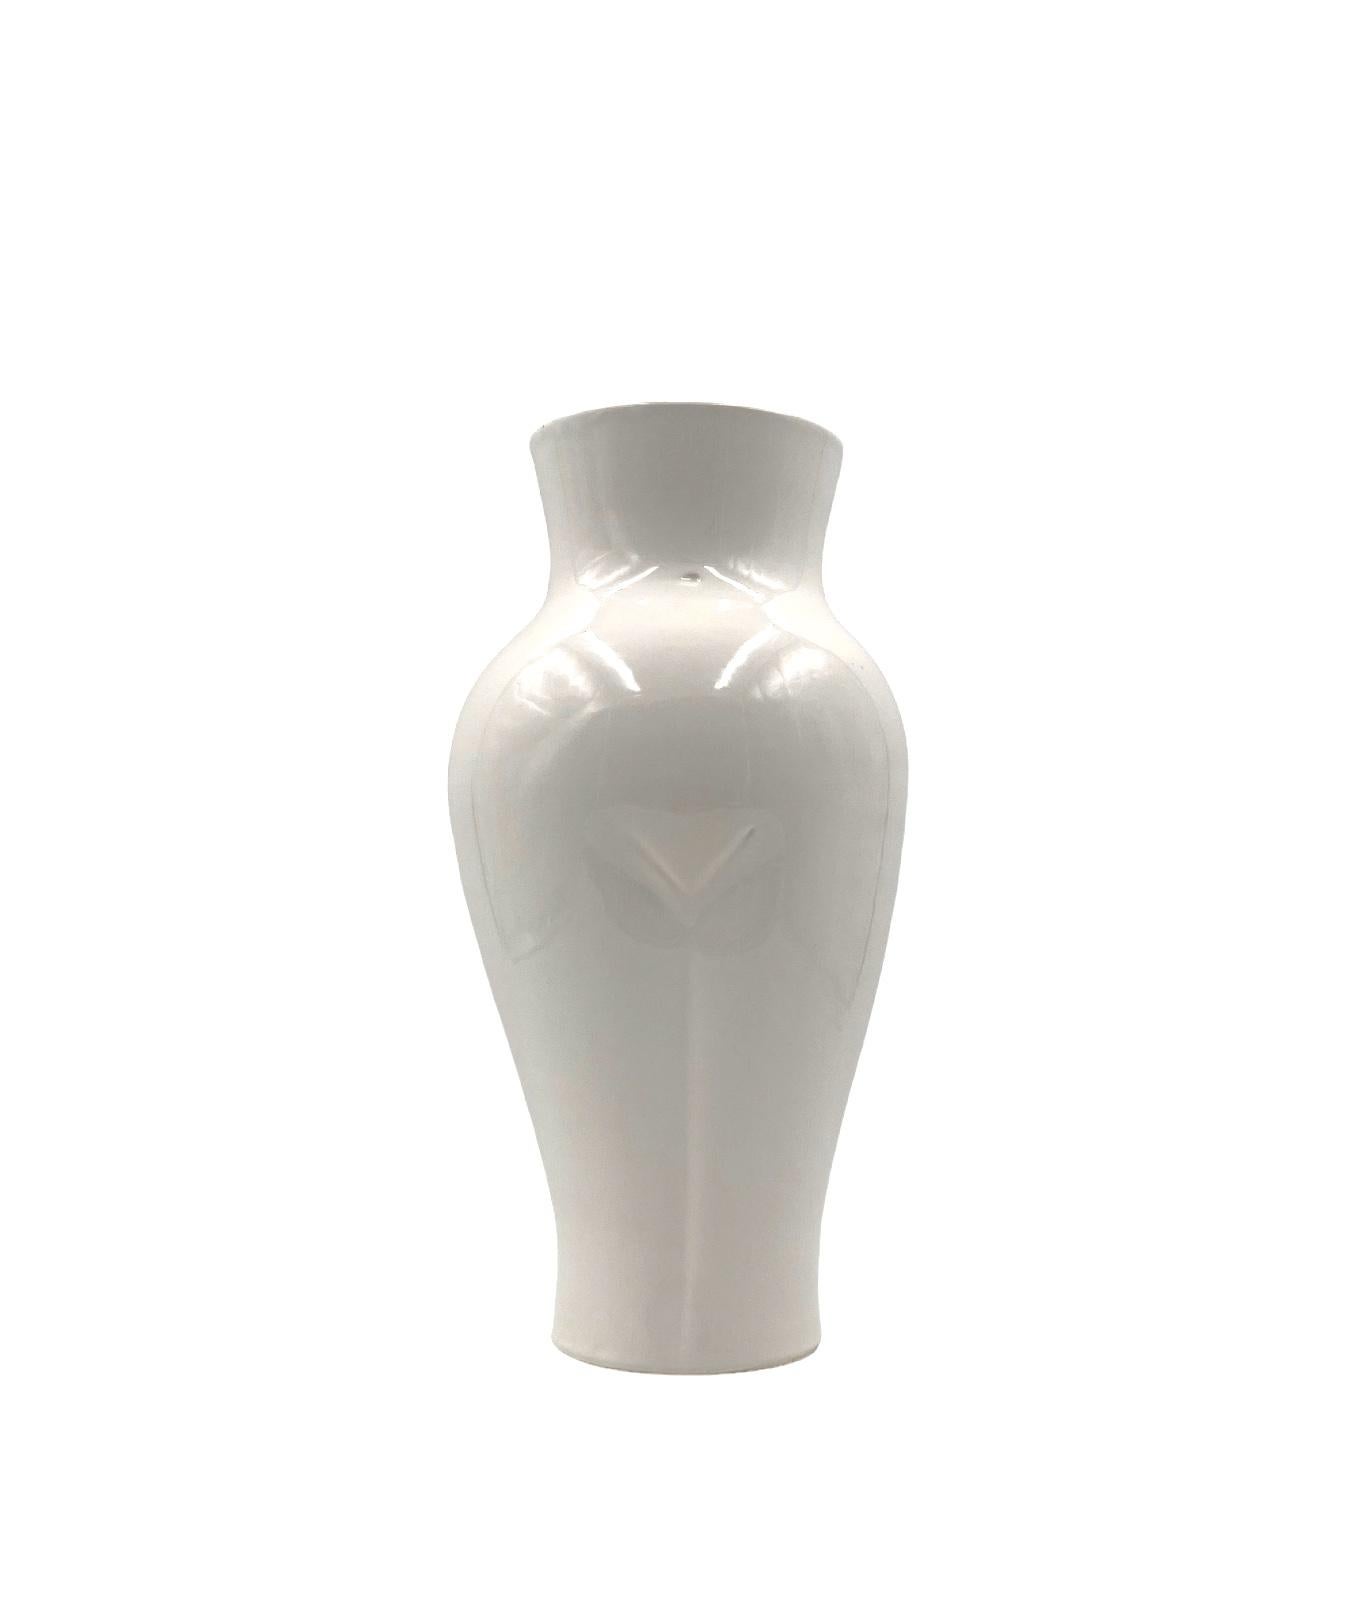 Postmodern ceramic 'Femme' vase, Baba, Vallauris France ca. 1980s For Sale 4